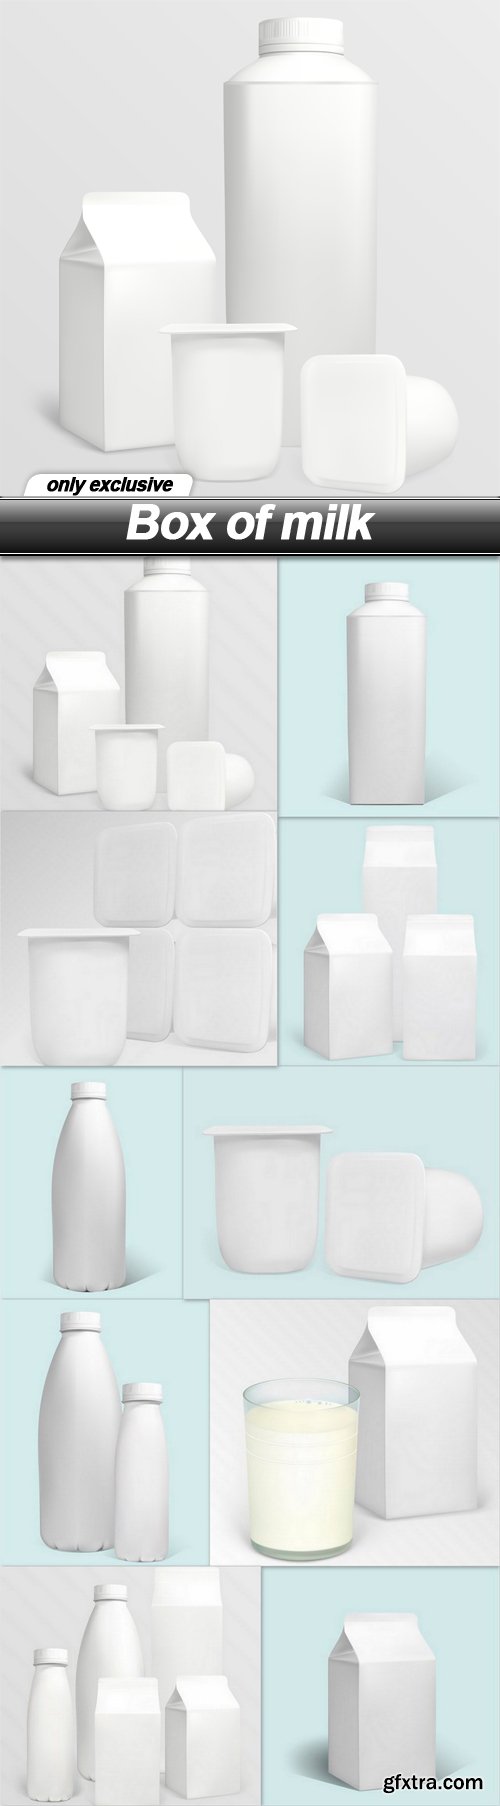 Box of milk - 10 EPS